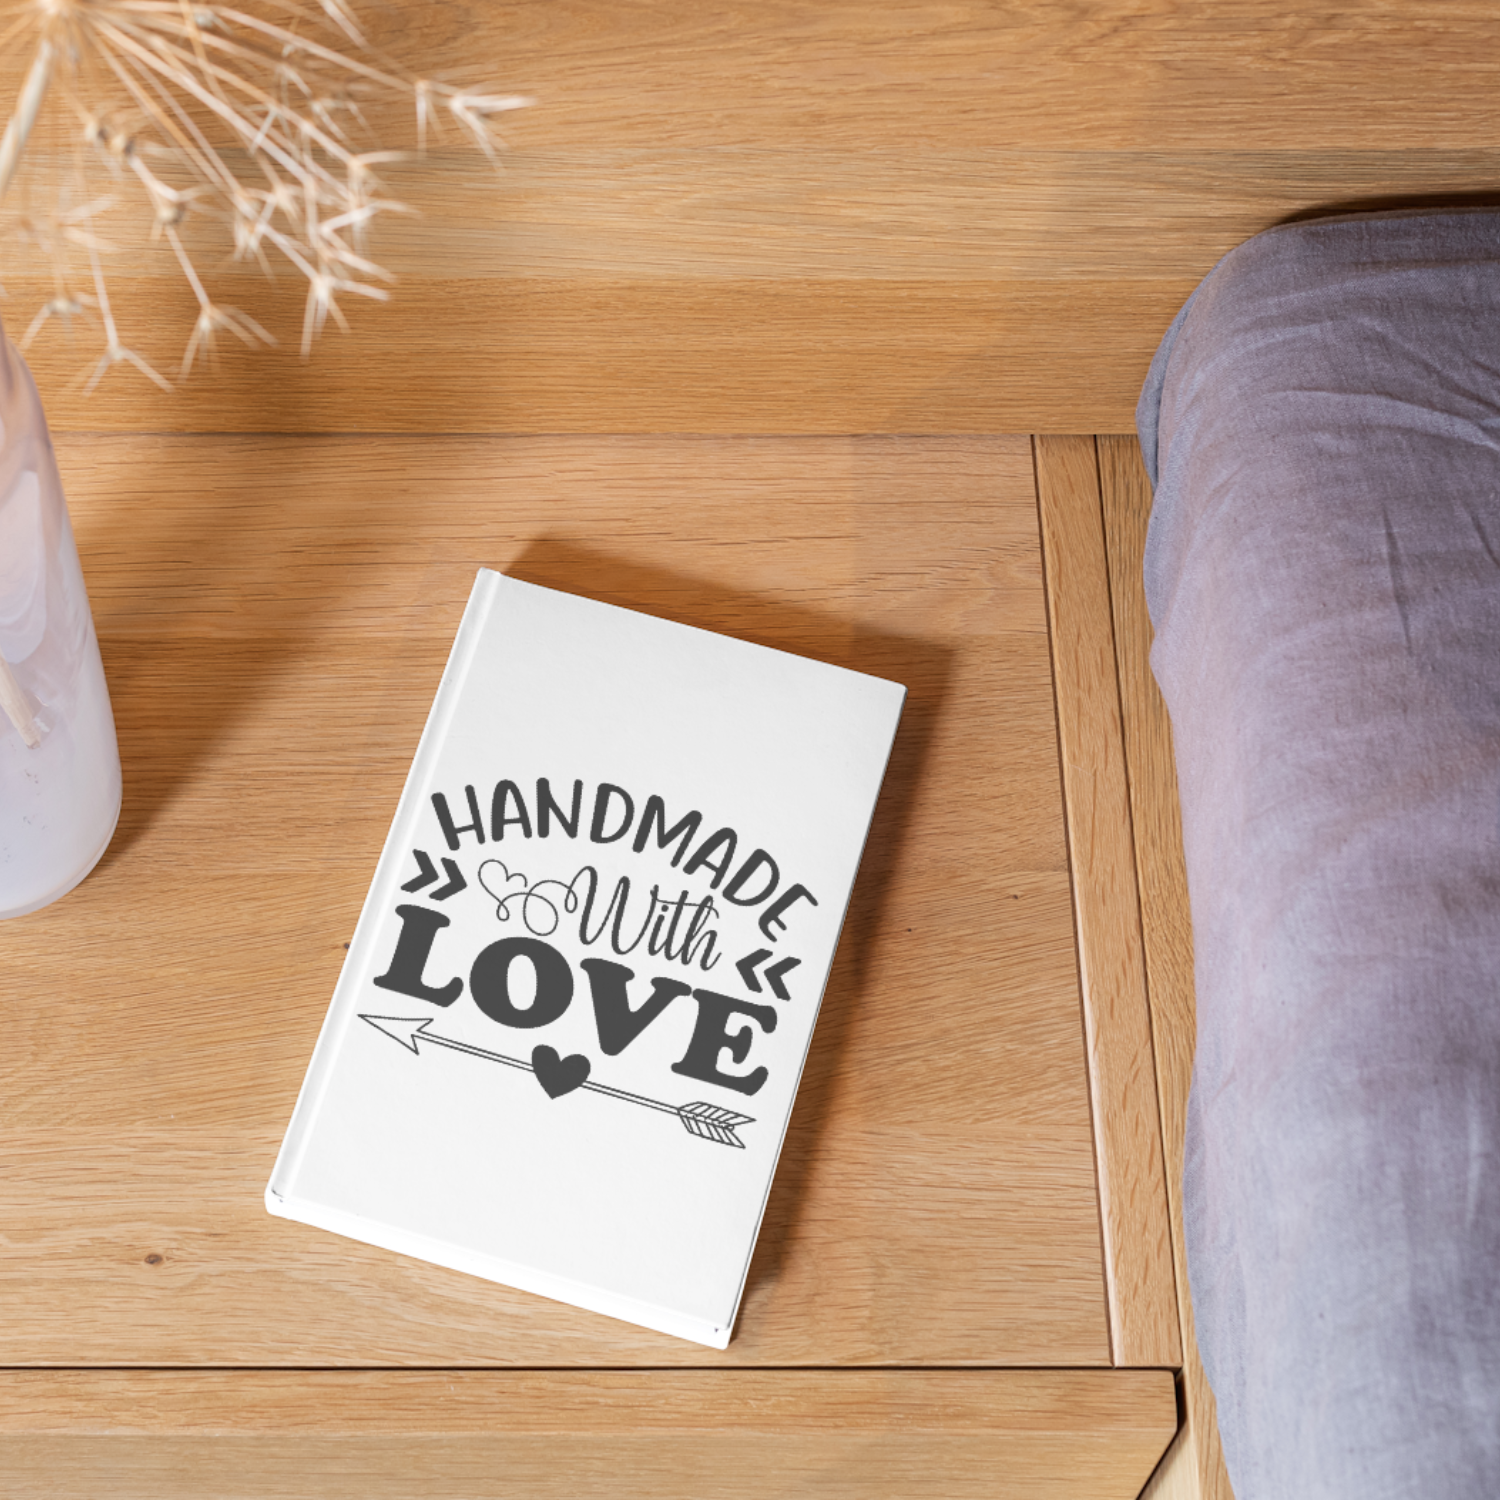 HANDMADE WITH LOVE 2 SVG | Digital Download | Cut File | SVG